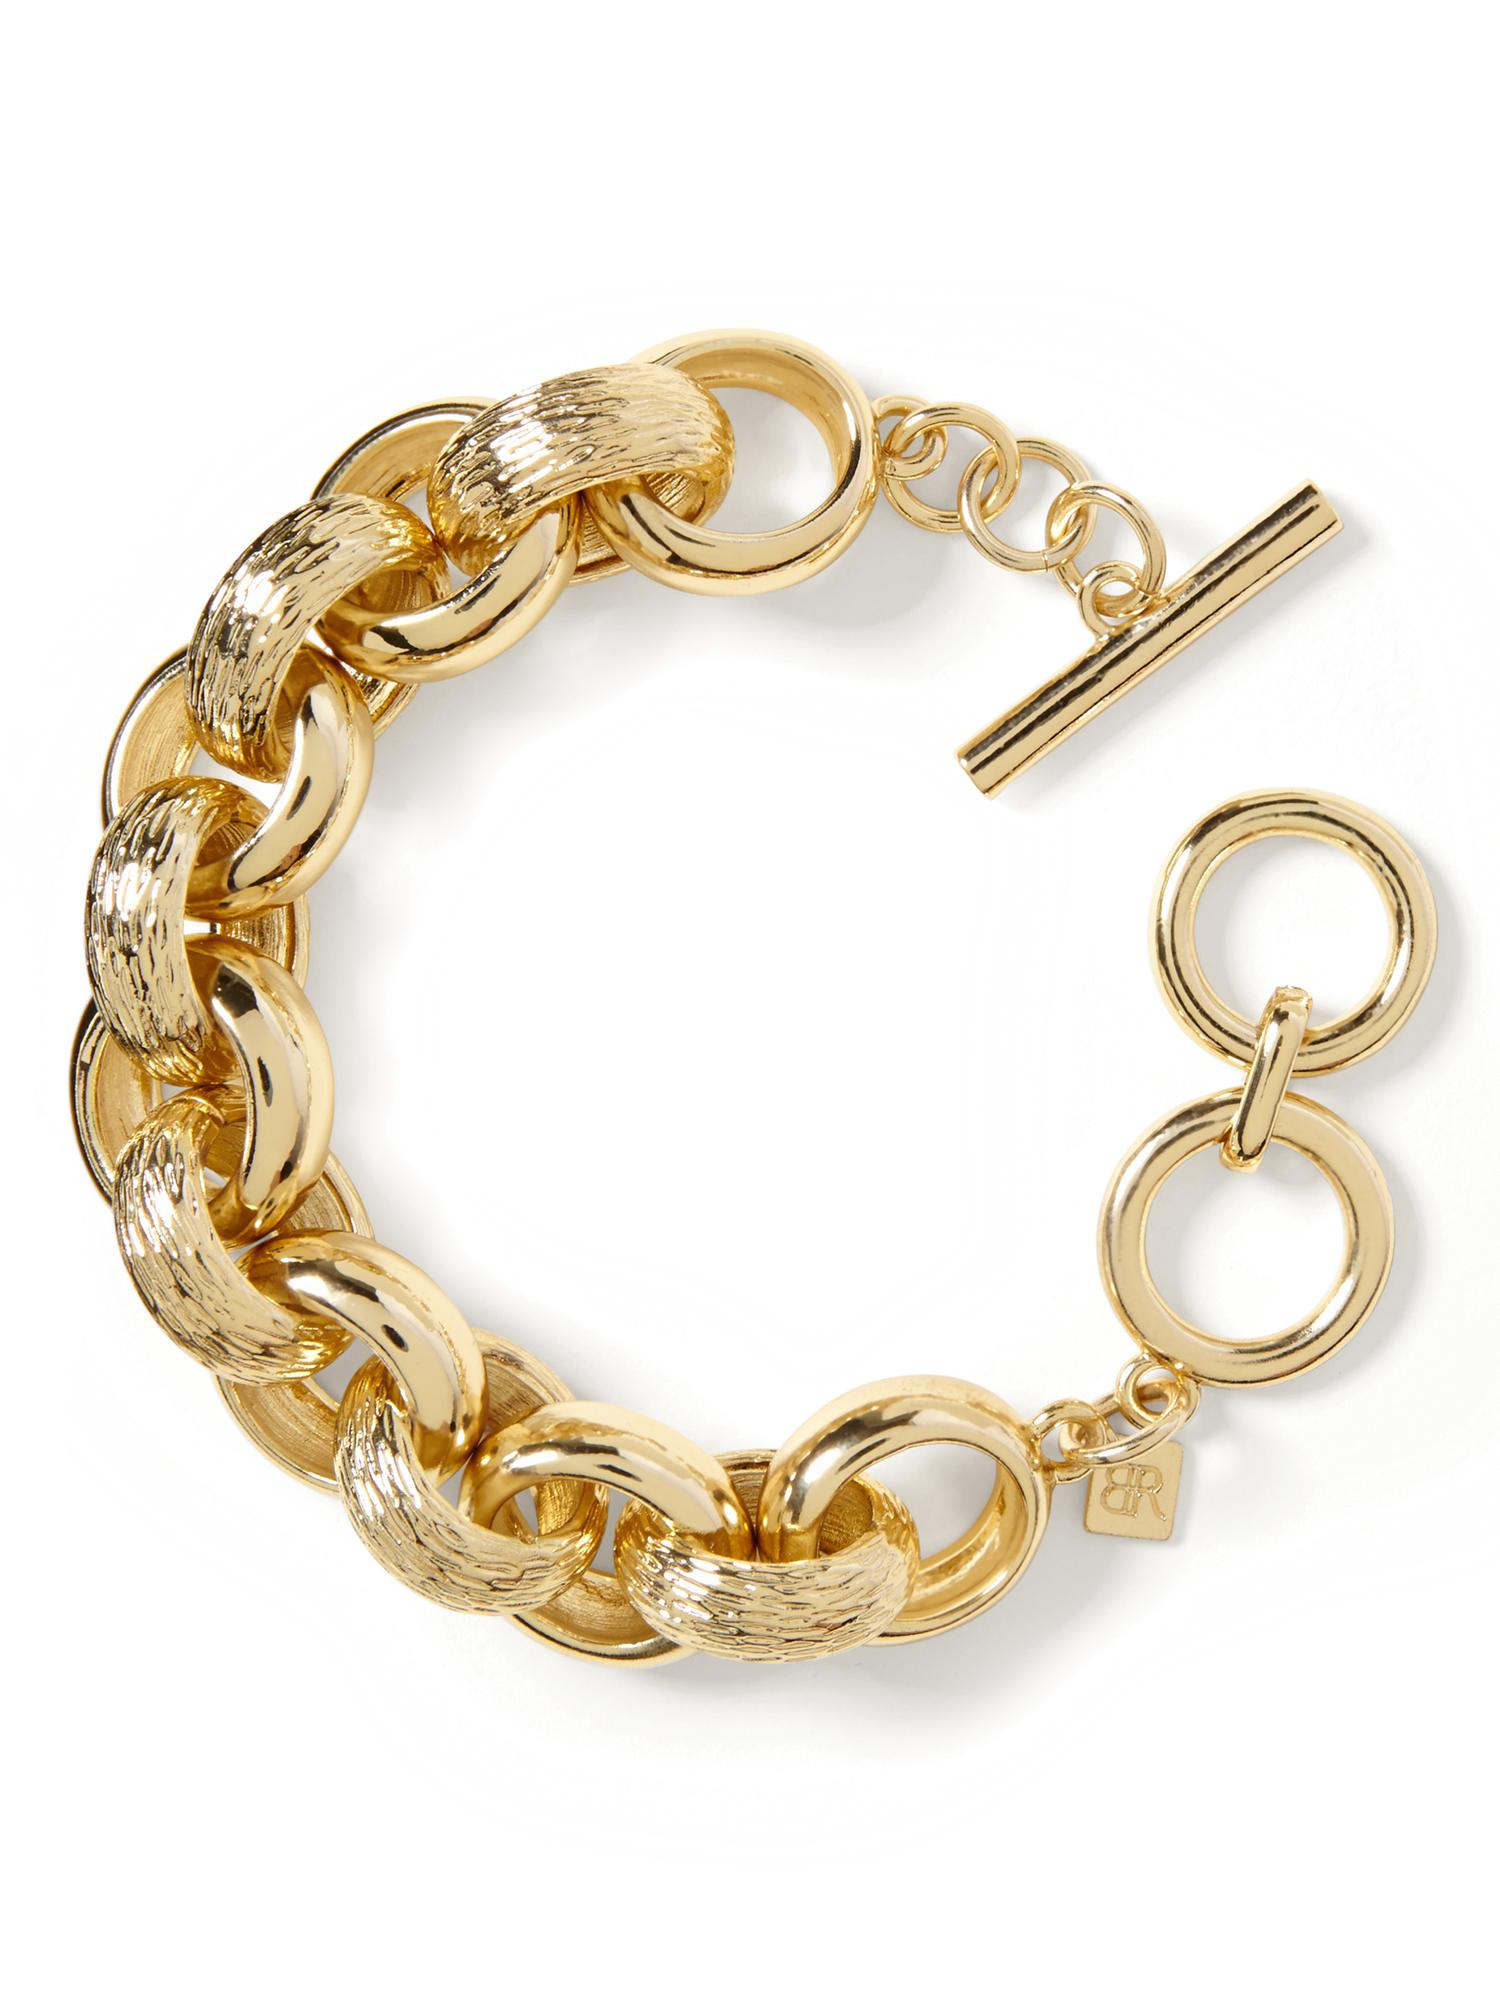 Lyst - Banana Republic Gold Link Bracelet in Metallic